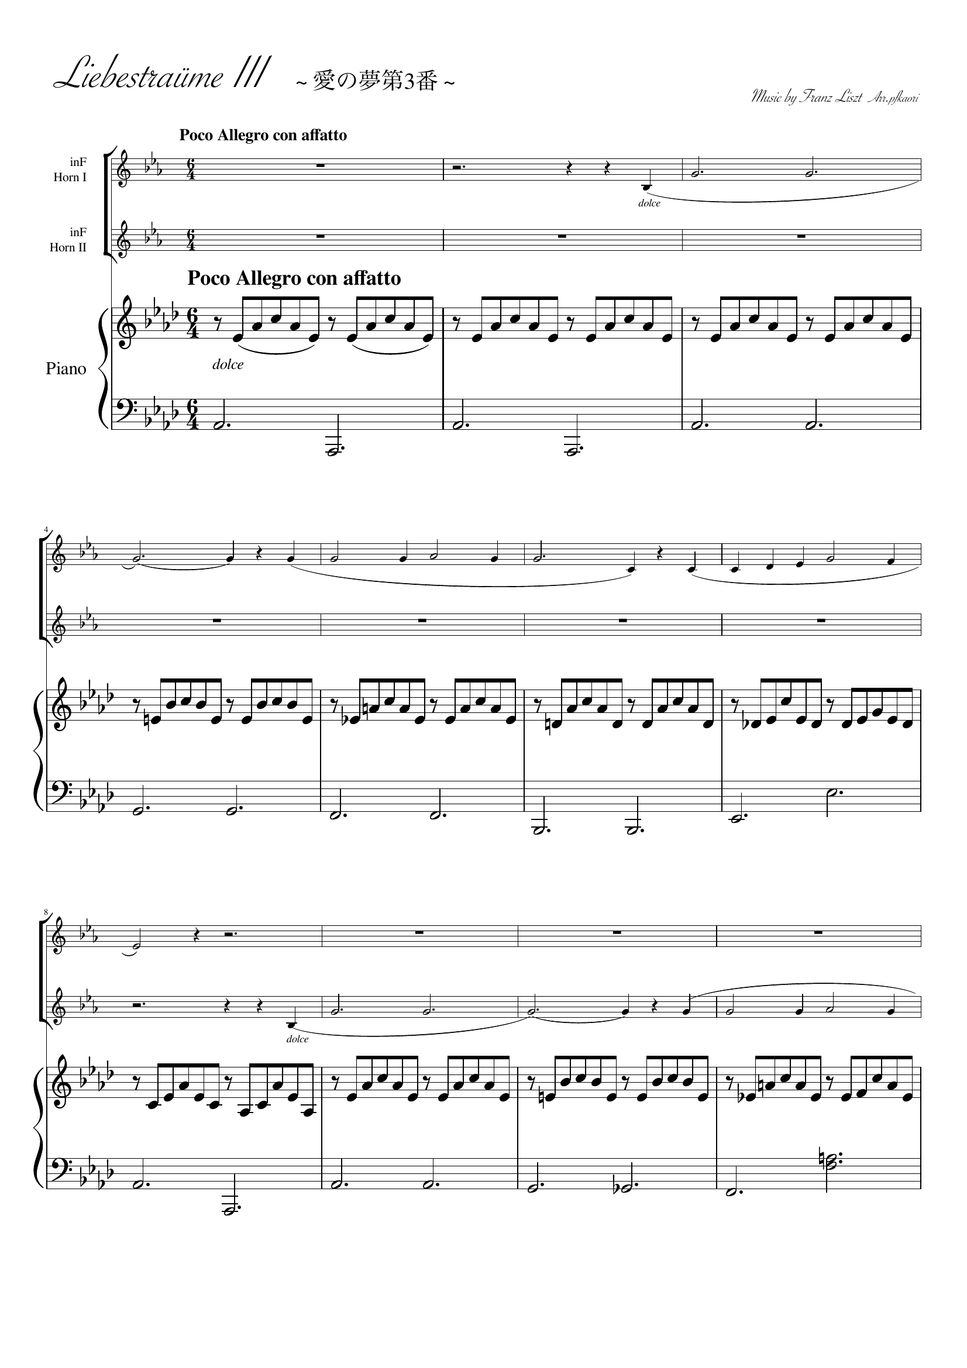 Franz Liszt - Liebestraum No. 3 (As・Piano trio / horn duet) by pfkaori